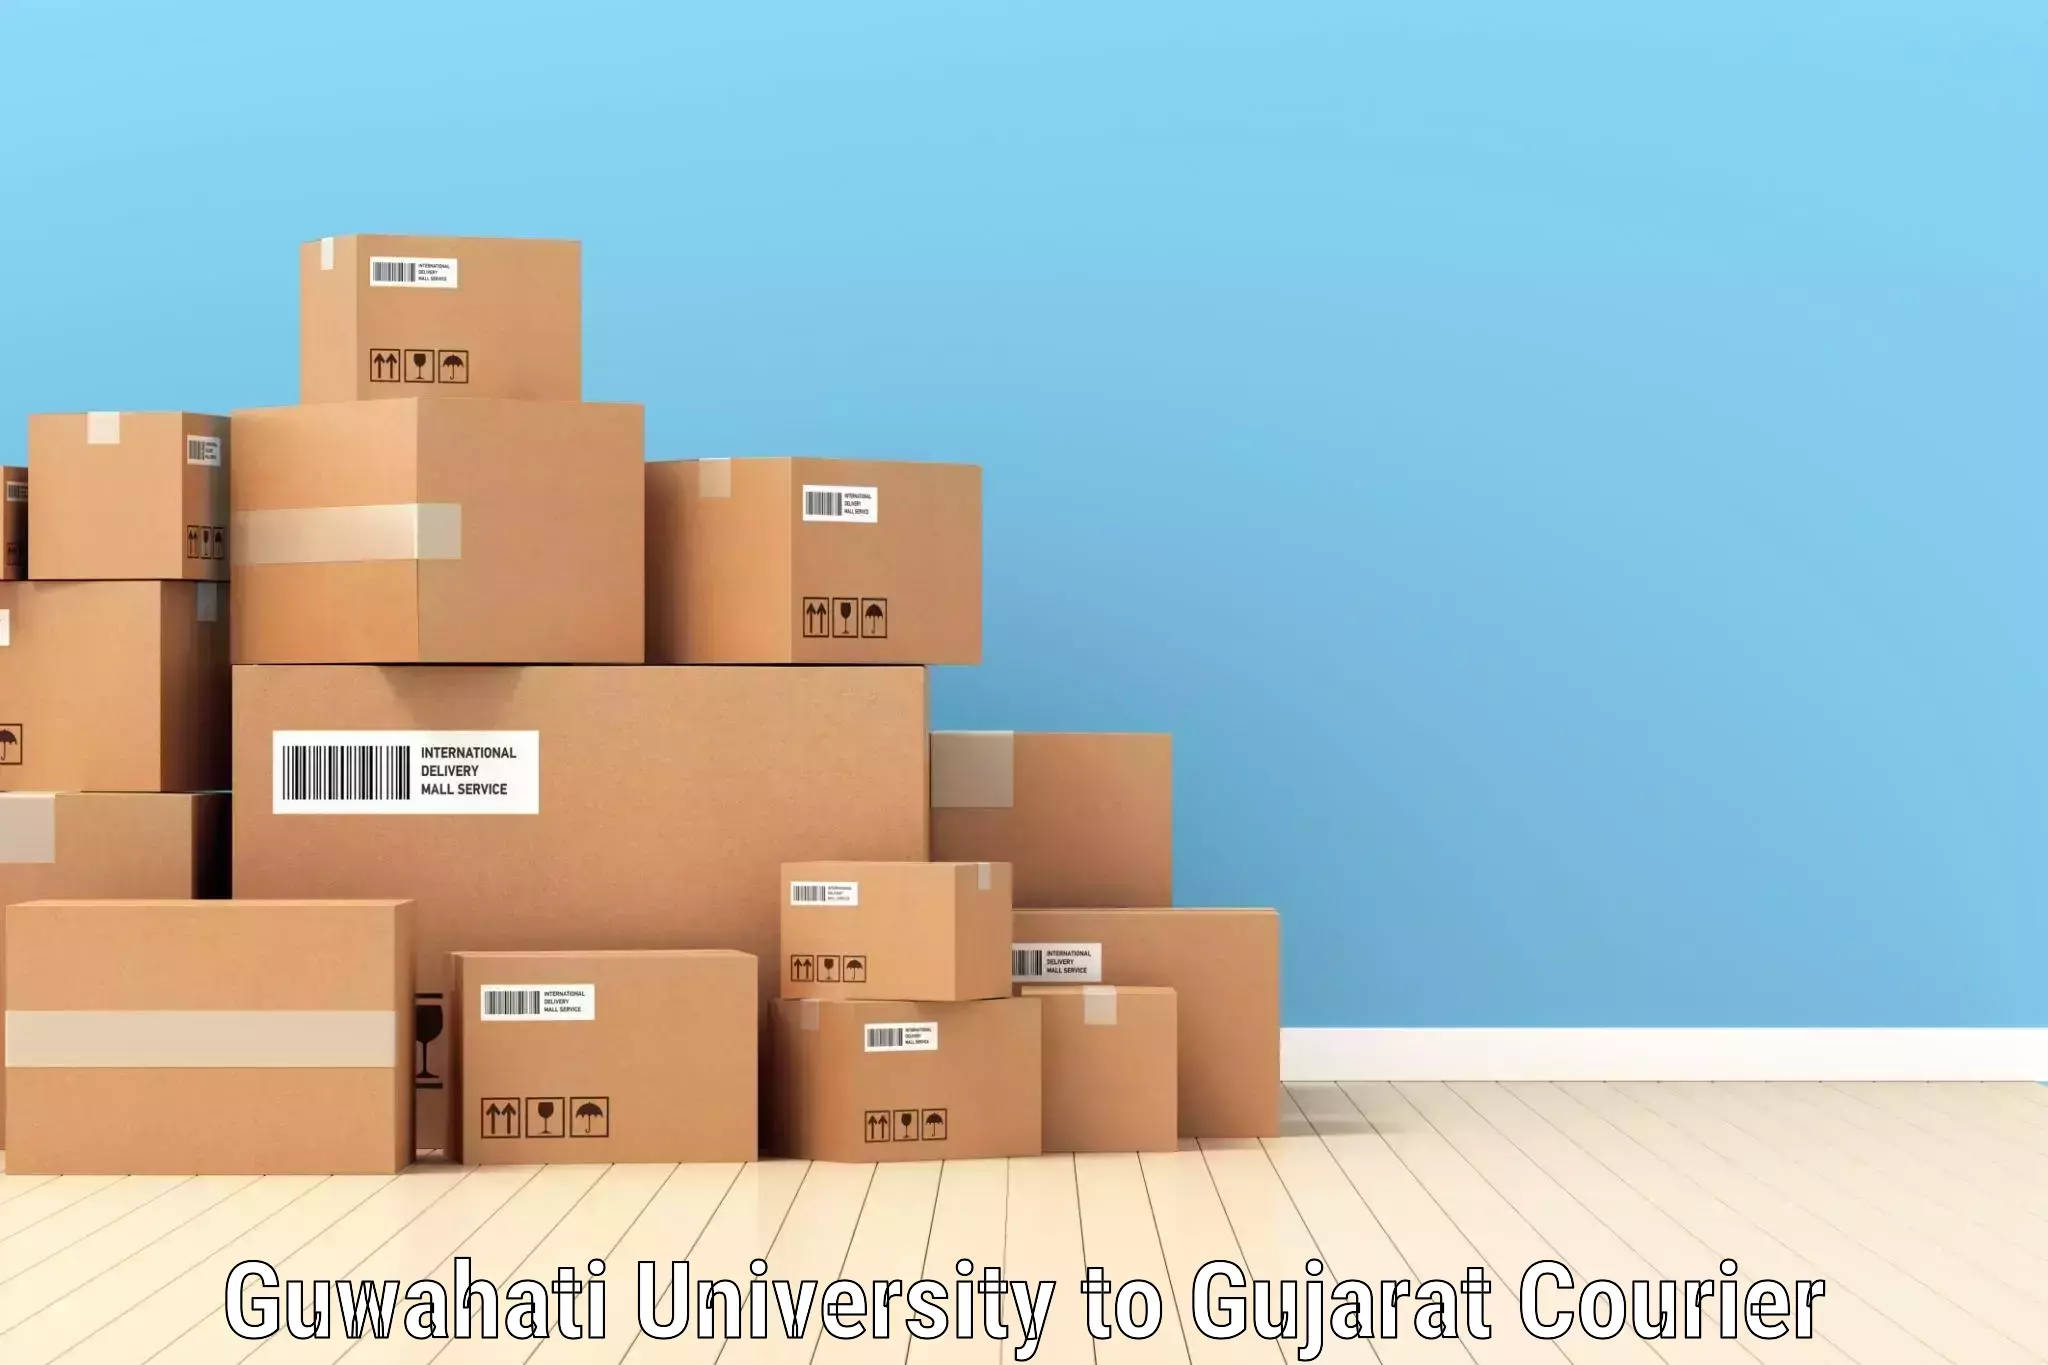 Express courier facilities Guwahati University to IIT Gandhi Nagar